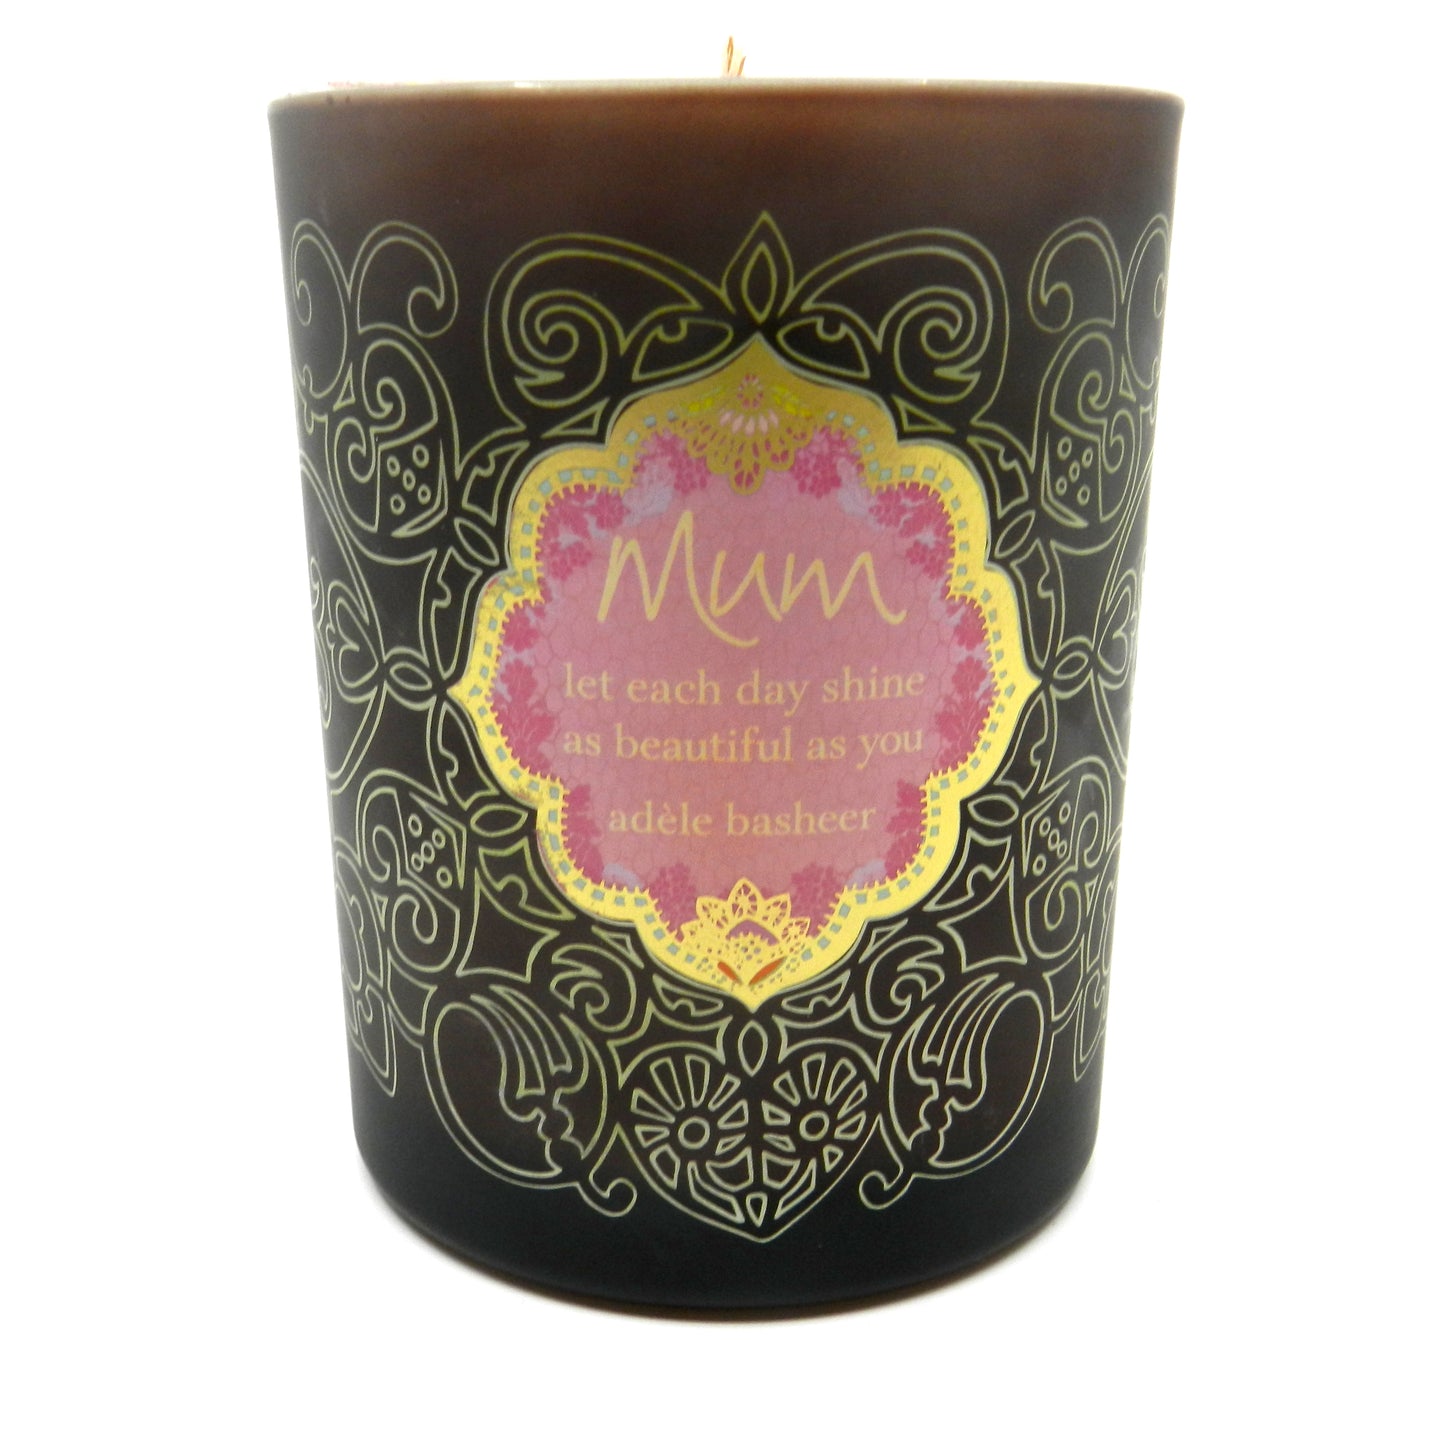 With Love for Mum - Tuberose, Gardenia & Lush Blossom Candle